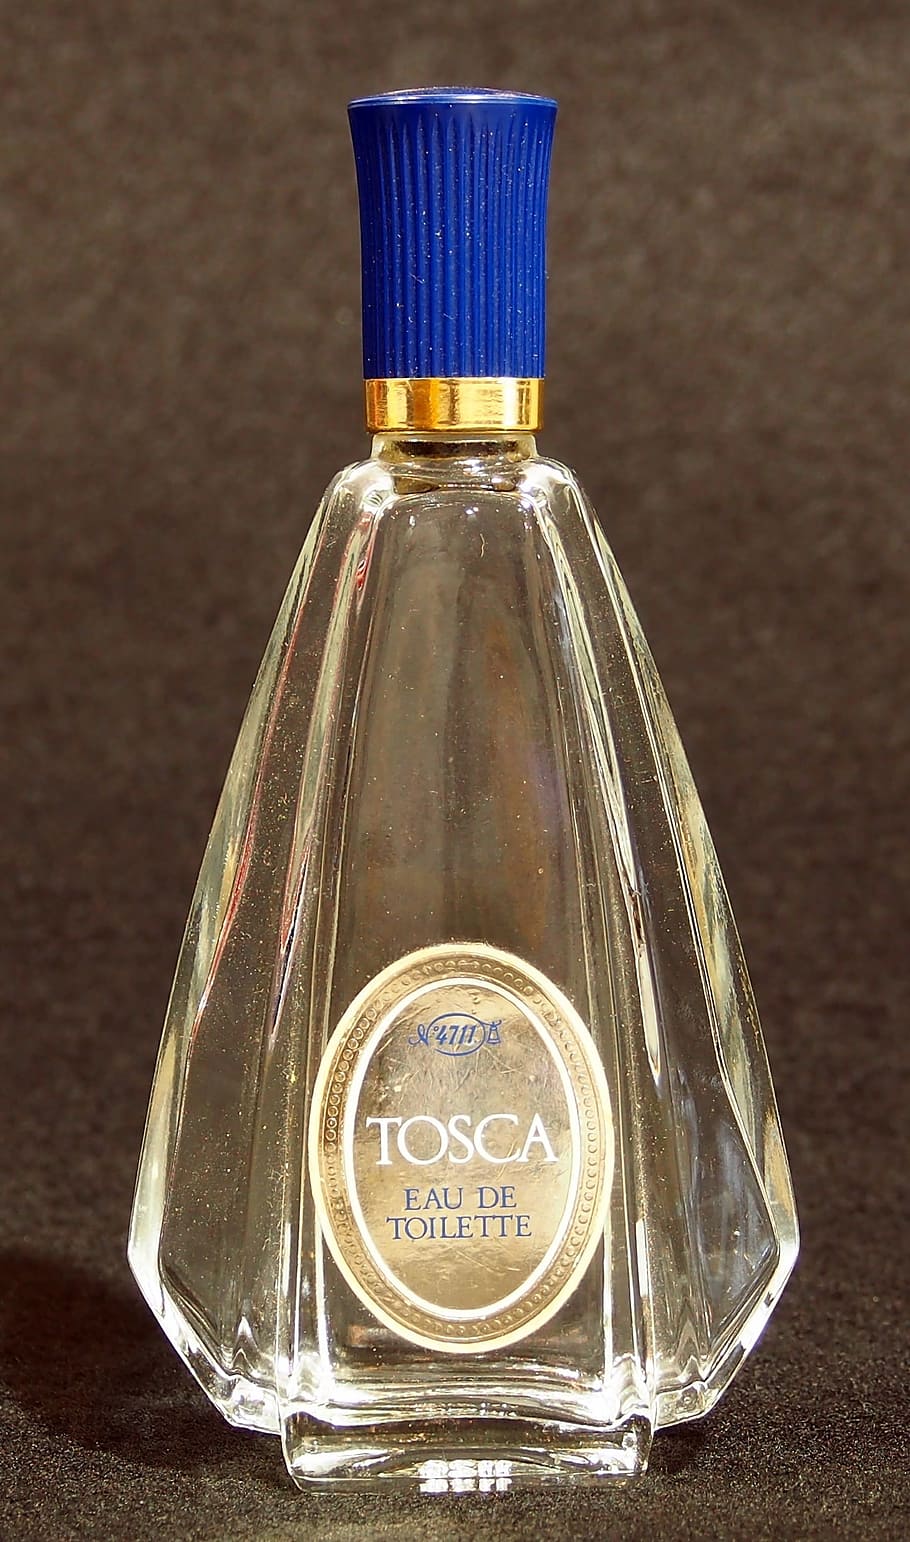 Tosca, Perfume, Garrafa, Vintage, essencial, ingrediente, odor, fragrância, pulverizador de perfume, perfumado